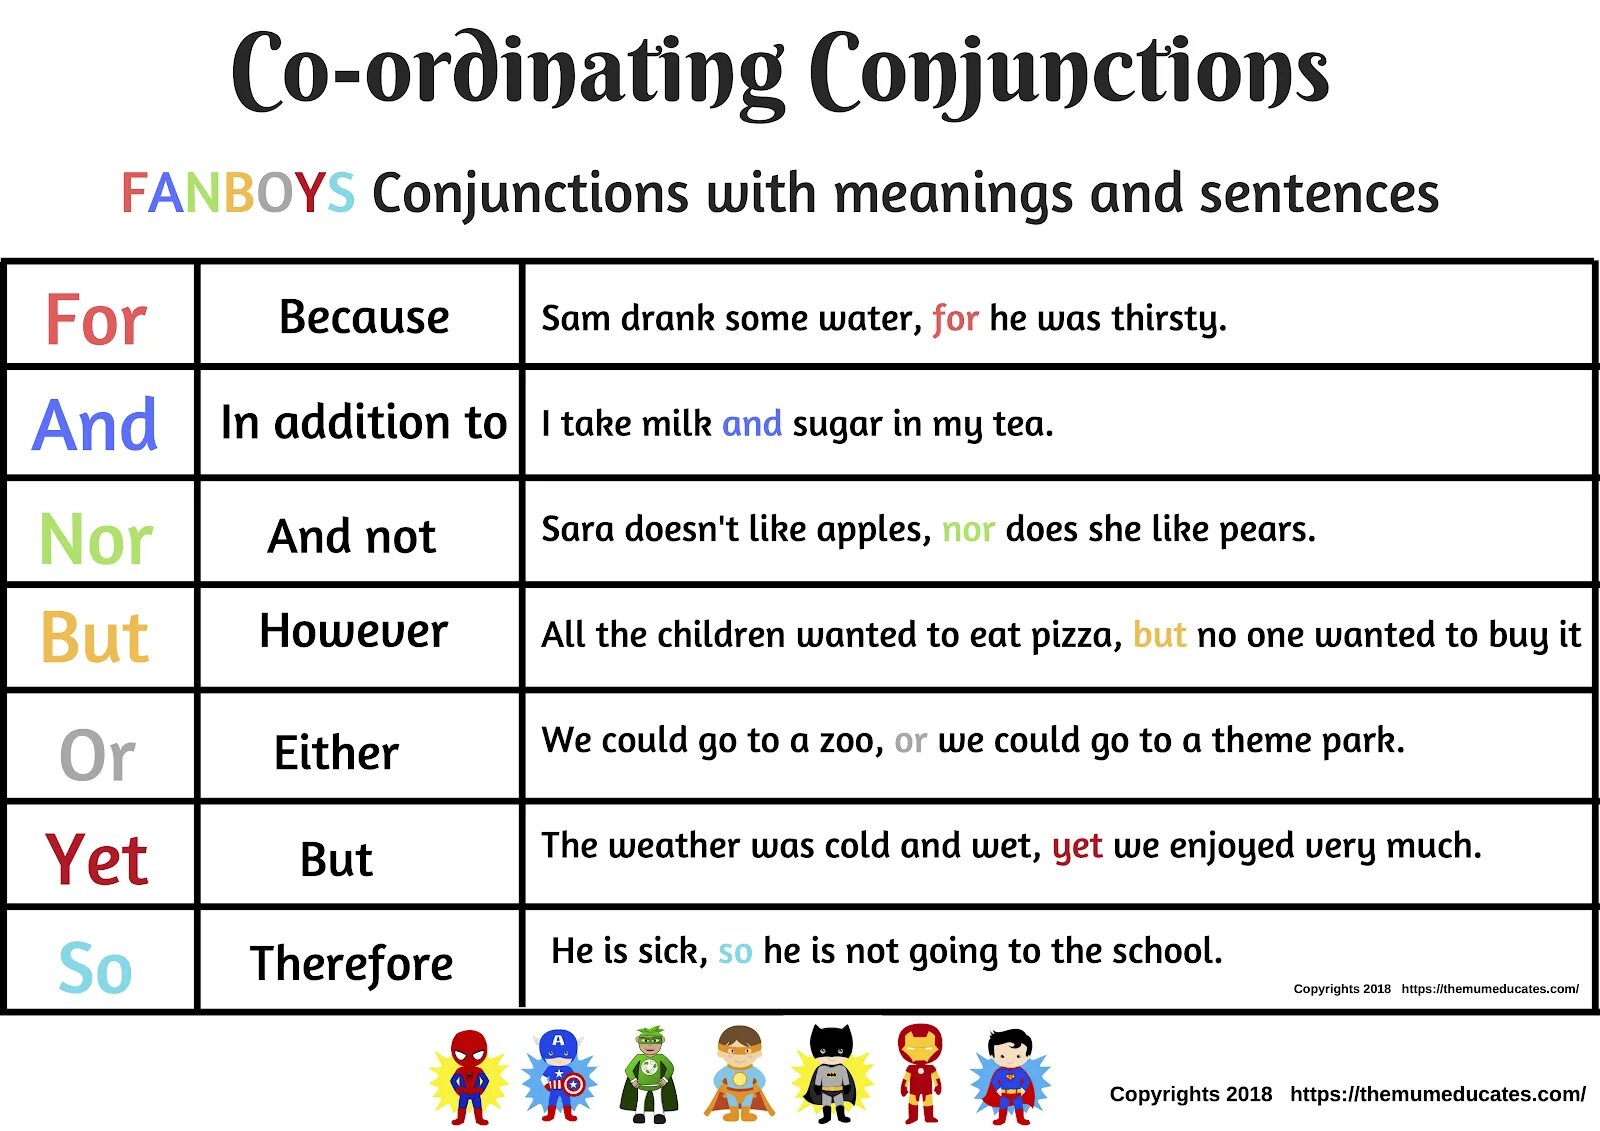 Fanboys conjunctions. Coordinating conjunctions в английском. Fanboys coordinating conjunction. Conjunction это в грамматике.